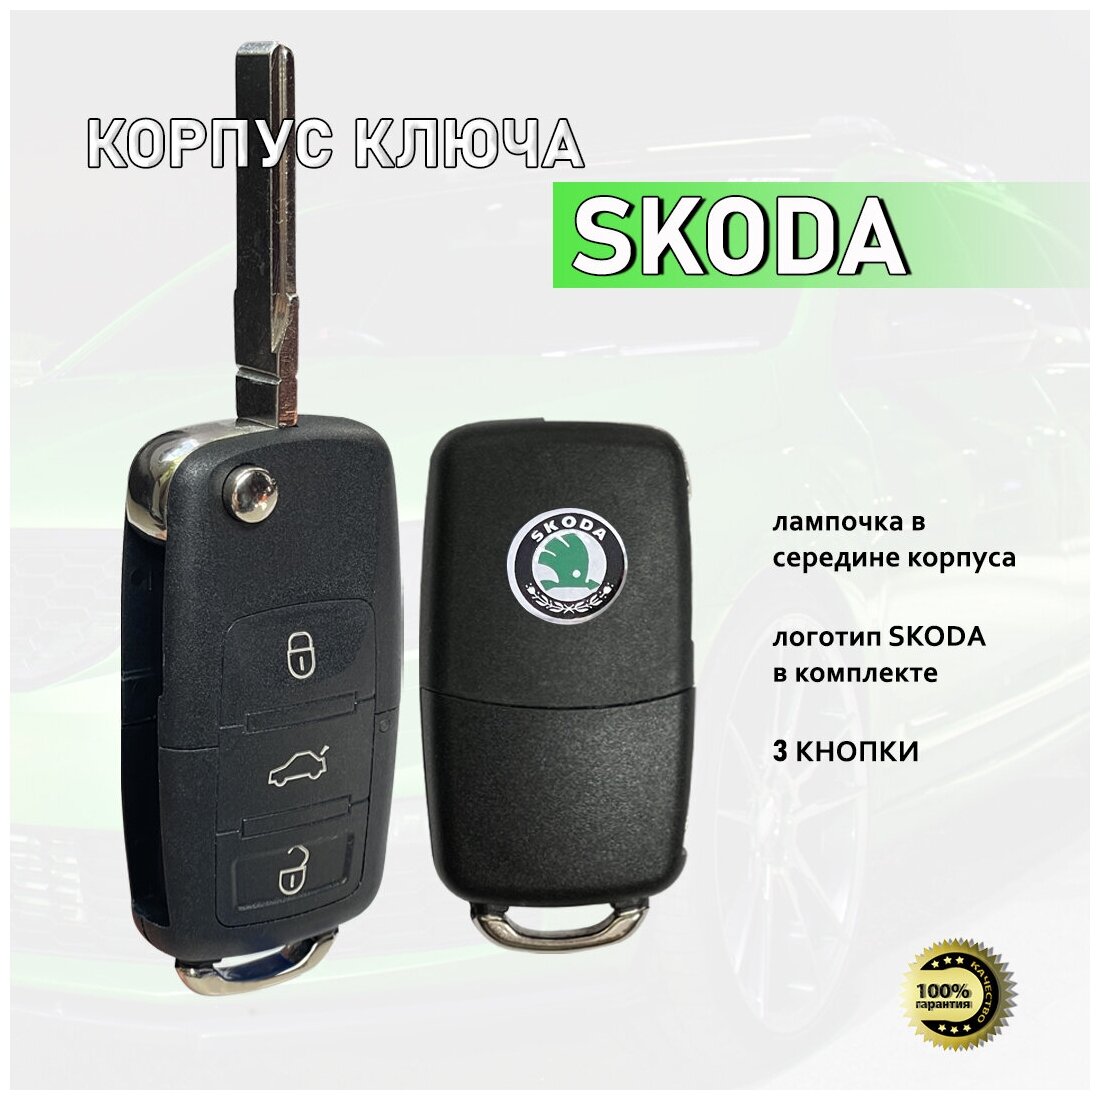 Корпус выкидного ключа зажигания шкода / Корпус ключа замка зажигания авто SKODA, (3 кнопки HU66)